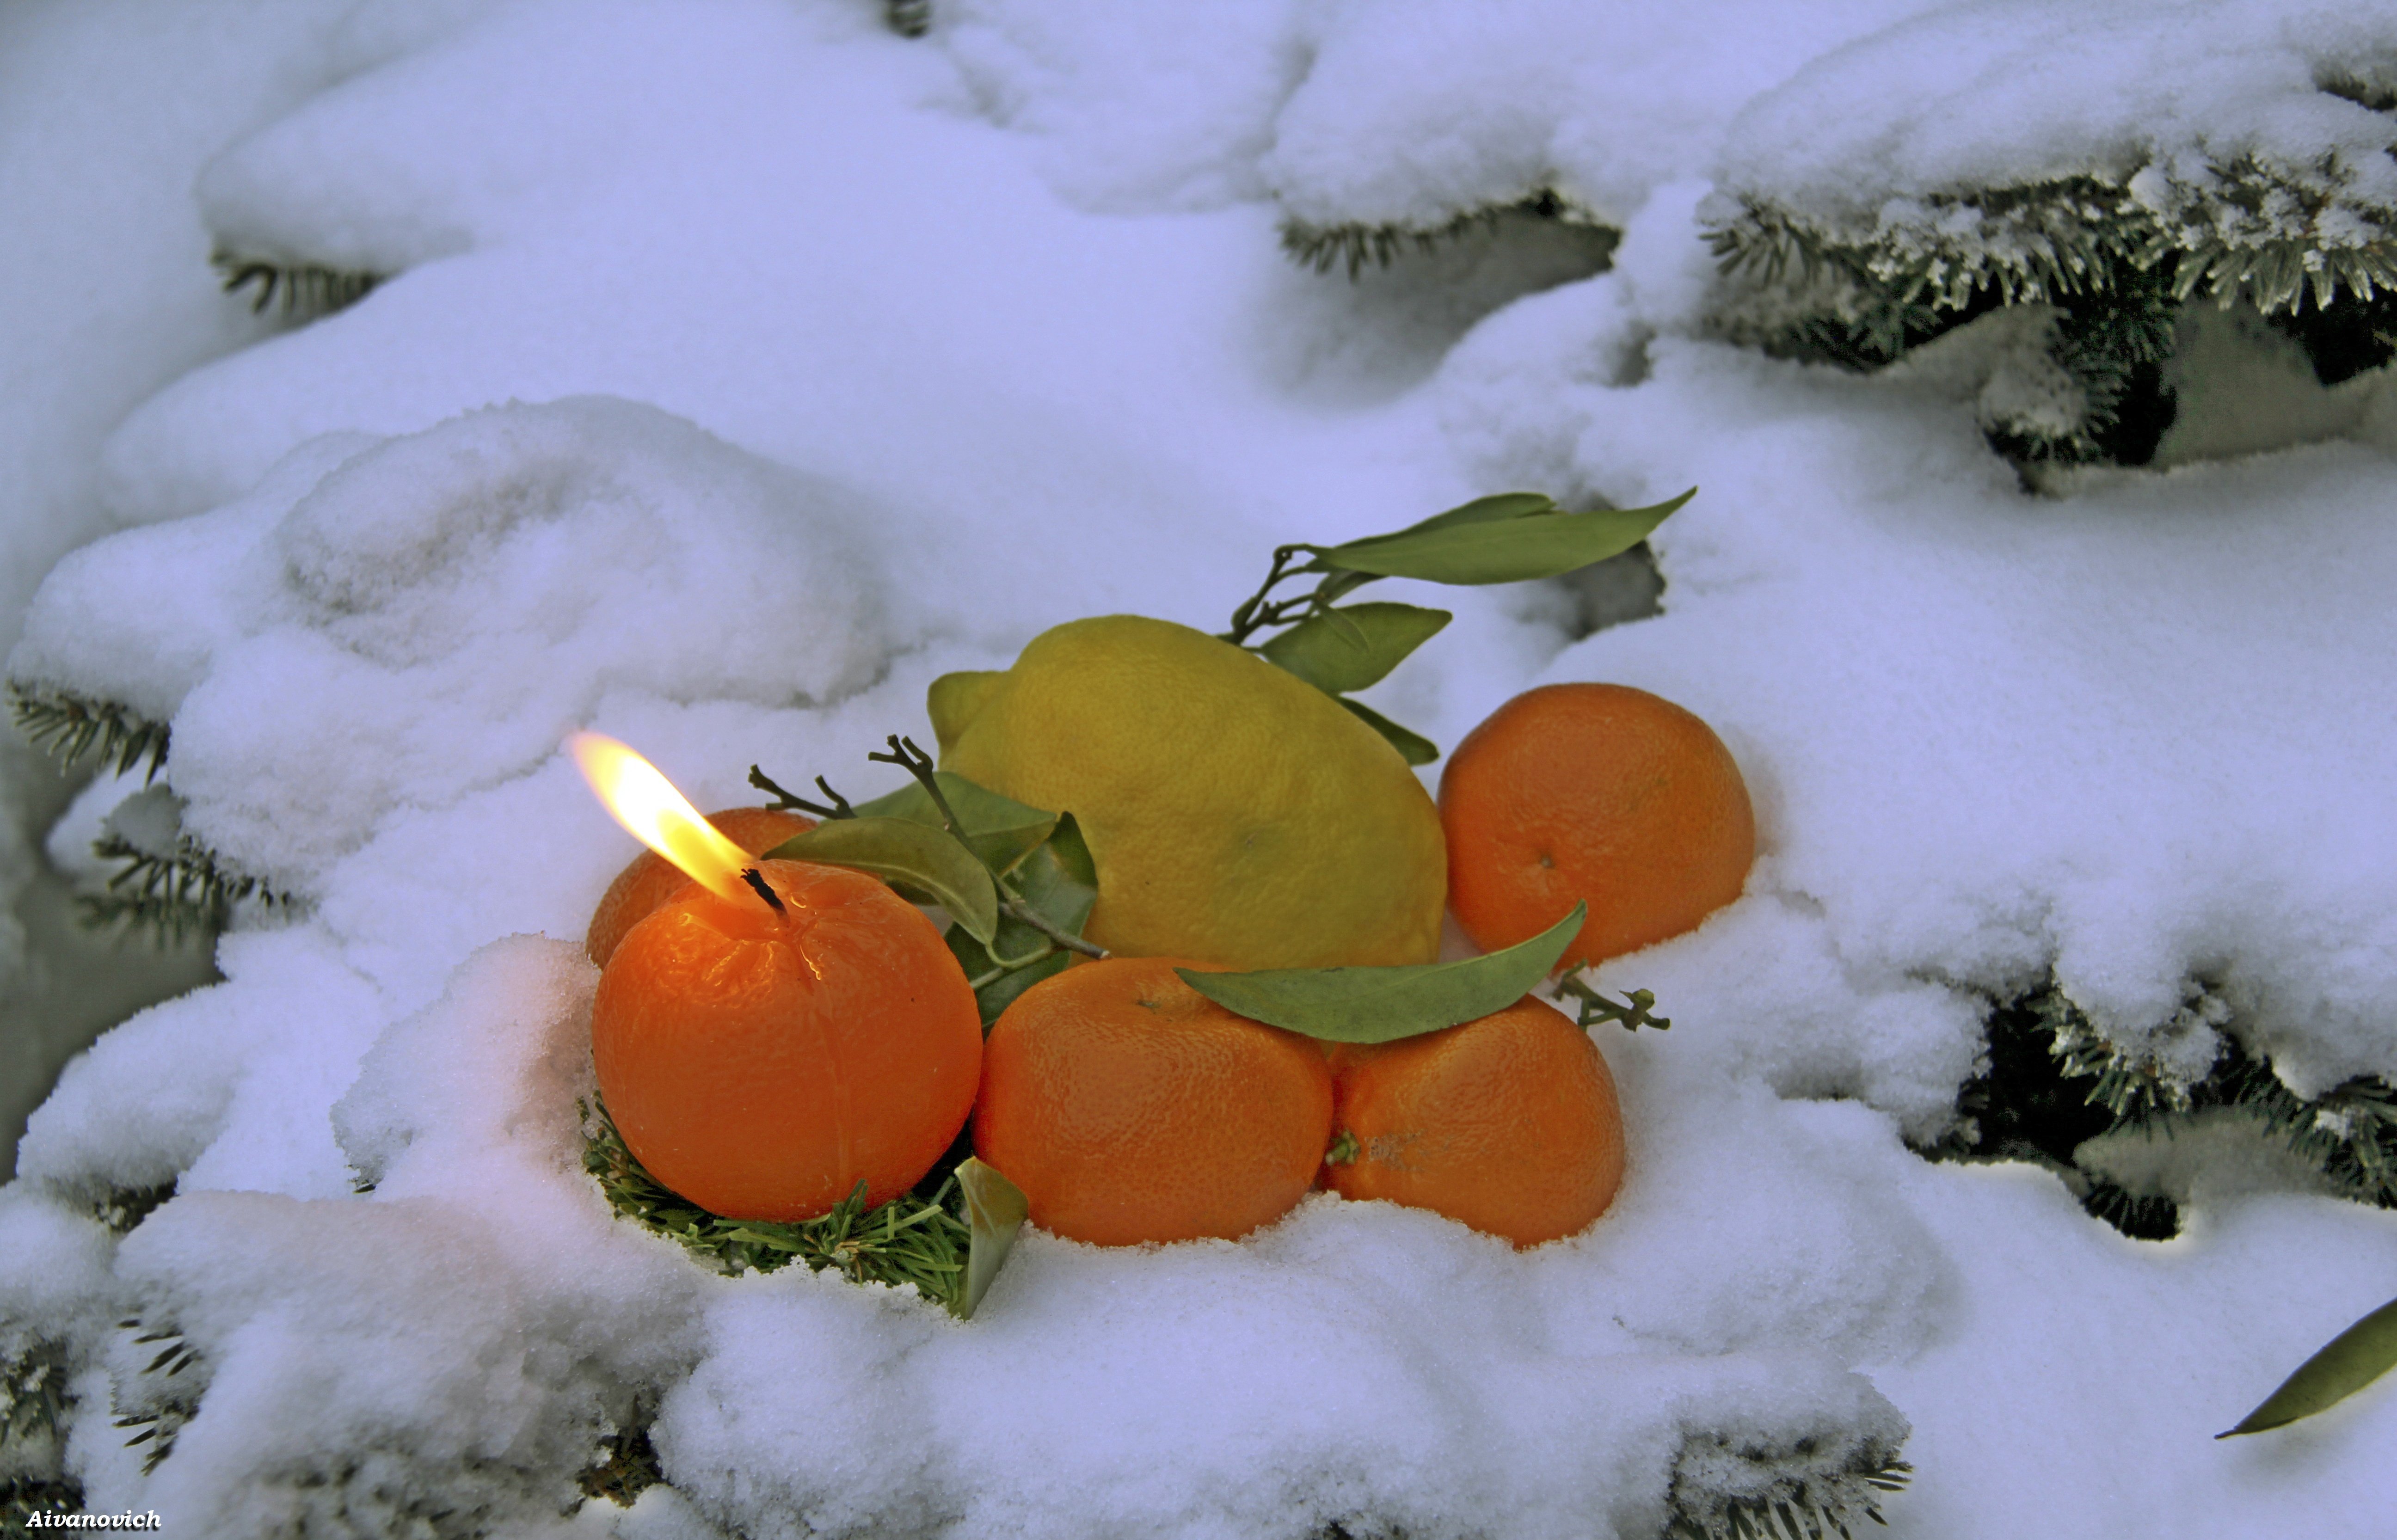 Мандарин мороз. Мандарины на снегу. Новогодние мандарины в снегу. Зима пахнет мандаринами. Новогодний натюрморт с мандаринами.